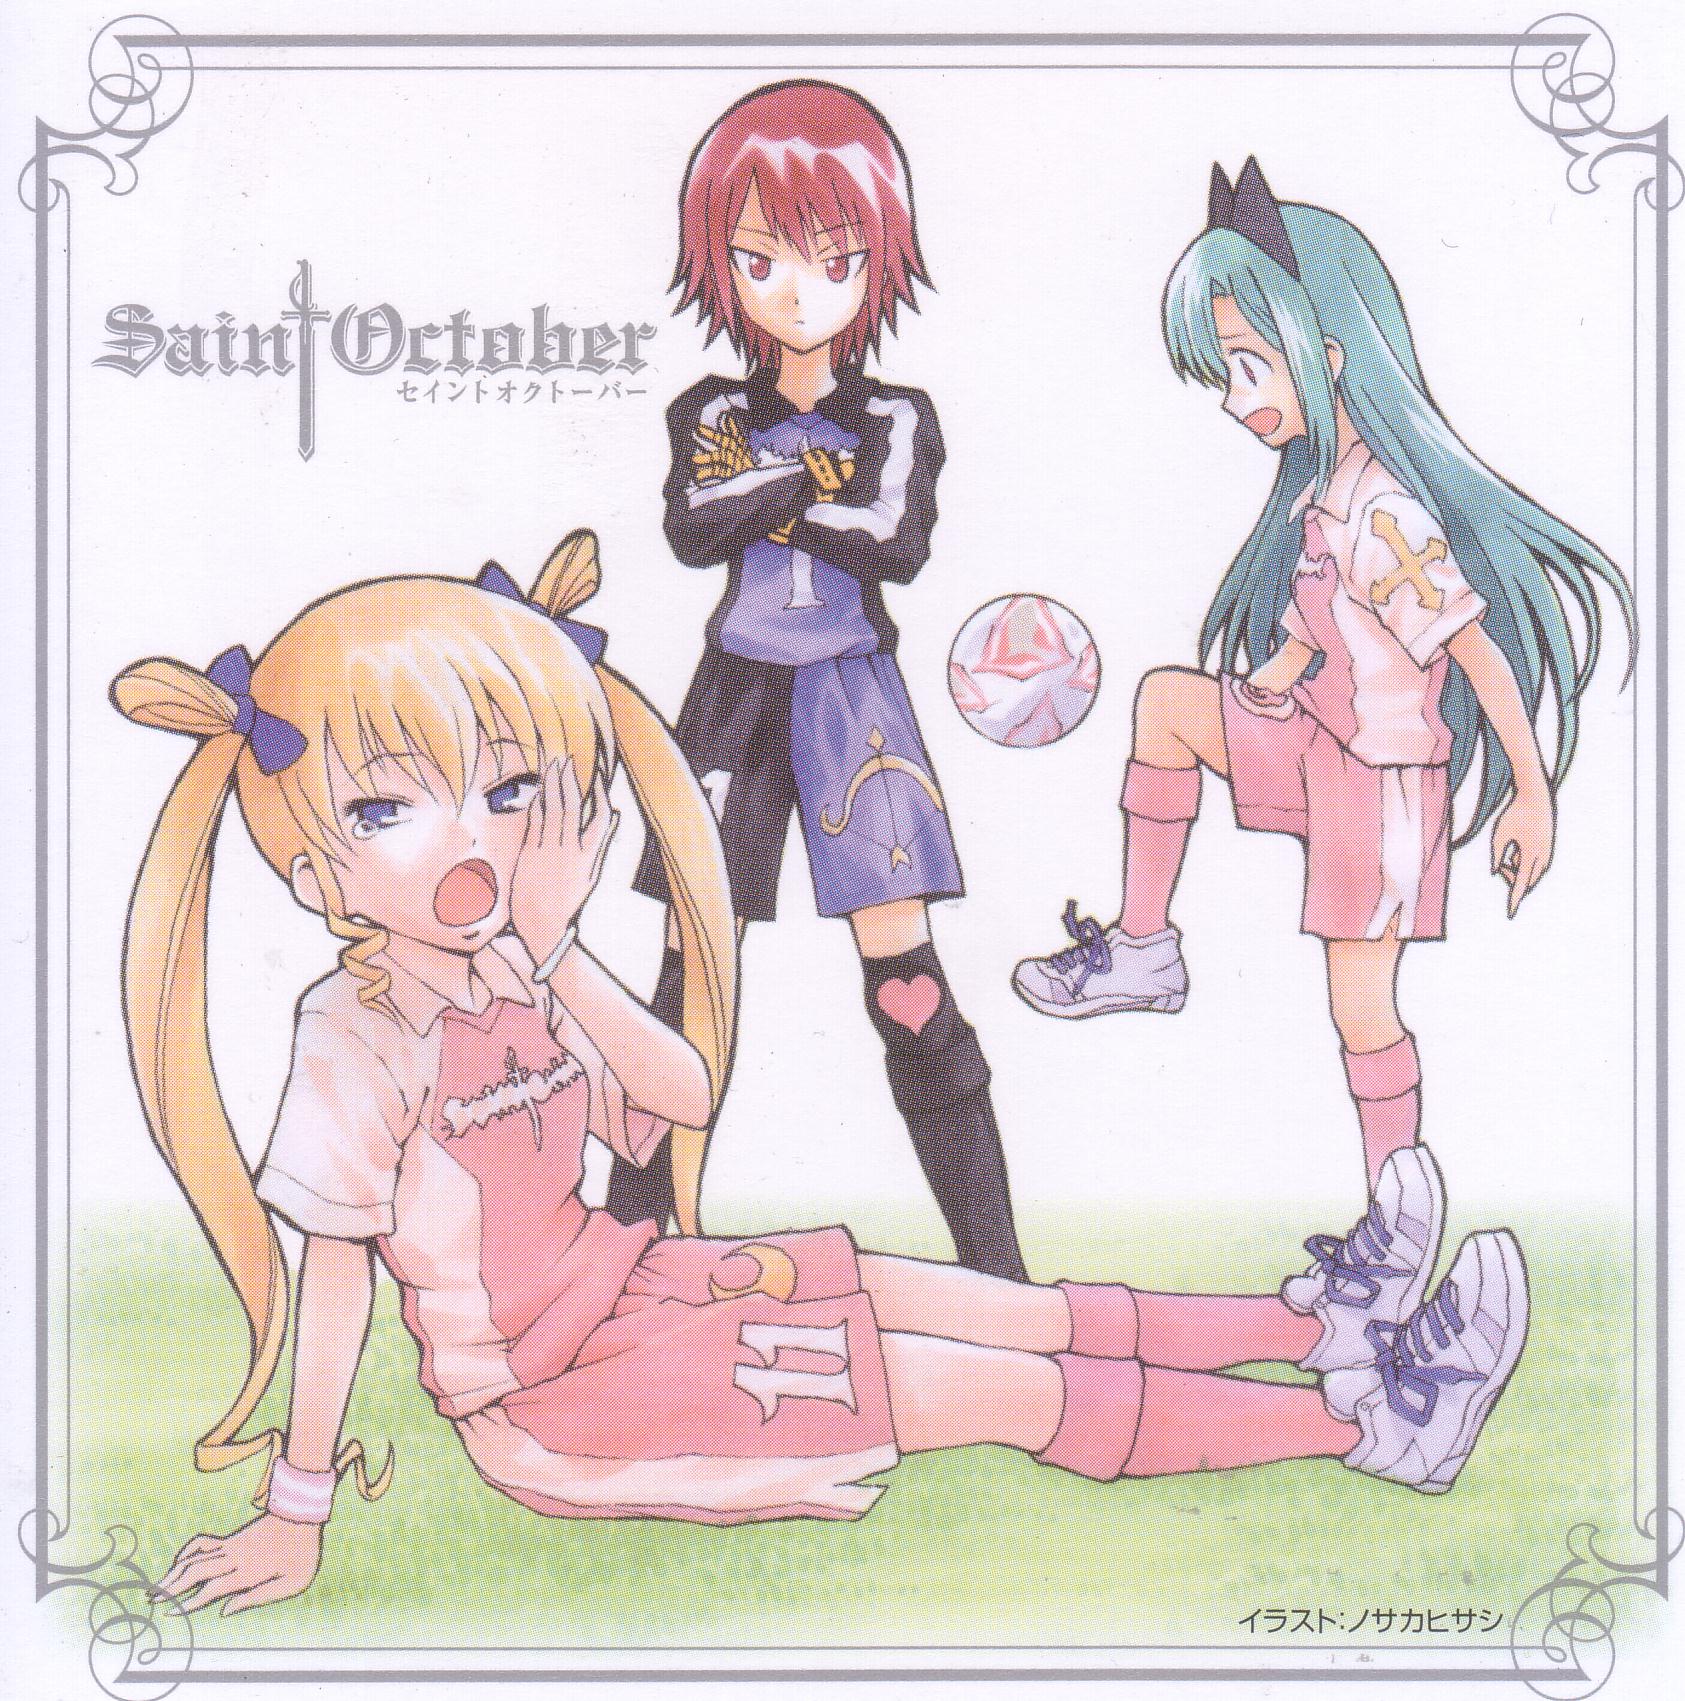 Saint October  #5